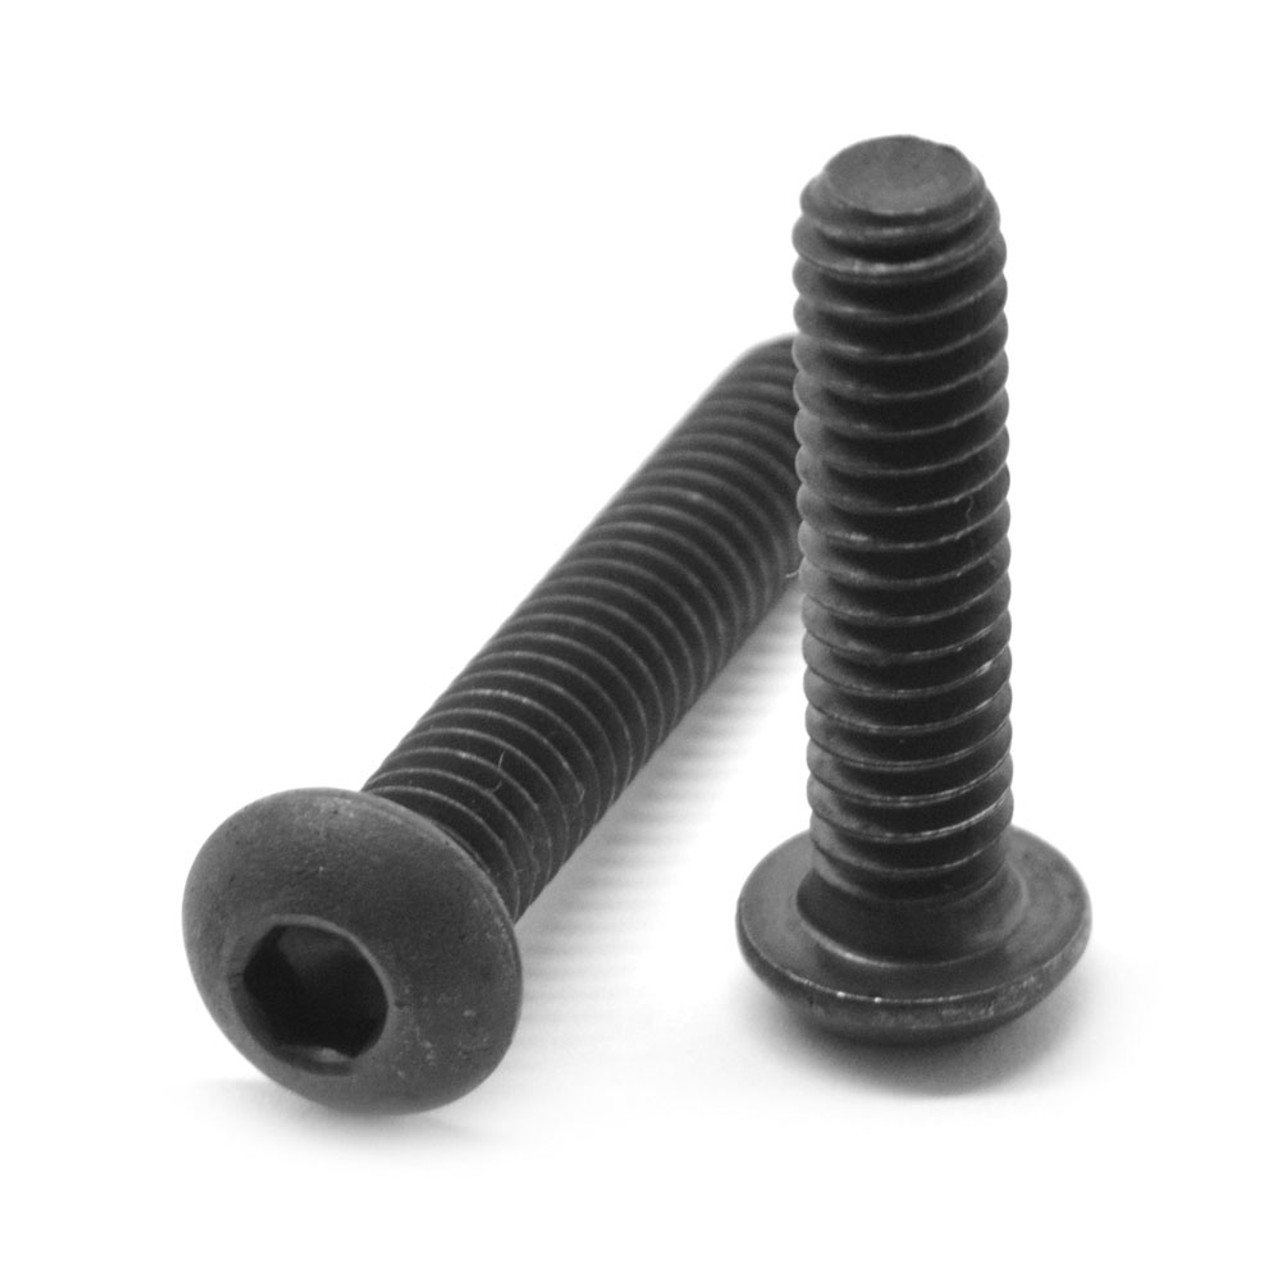 M3 x 0.50 x 14 MM (FT) Coarse Thread ISO 7380 Class 10.9 Socket Button Head Cap Screw Alloy Steel Black Oxide